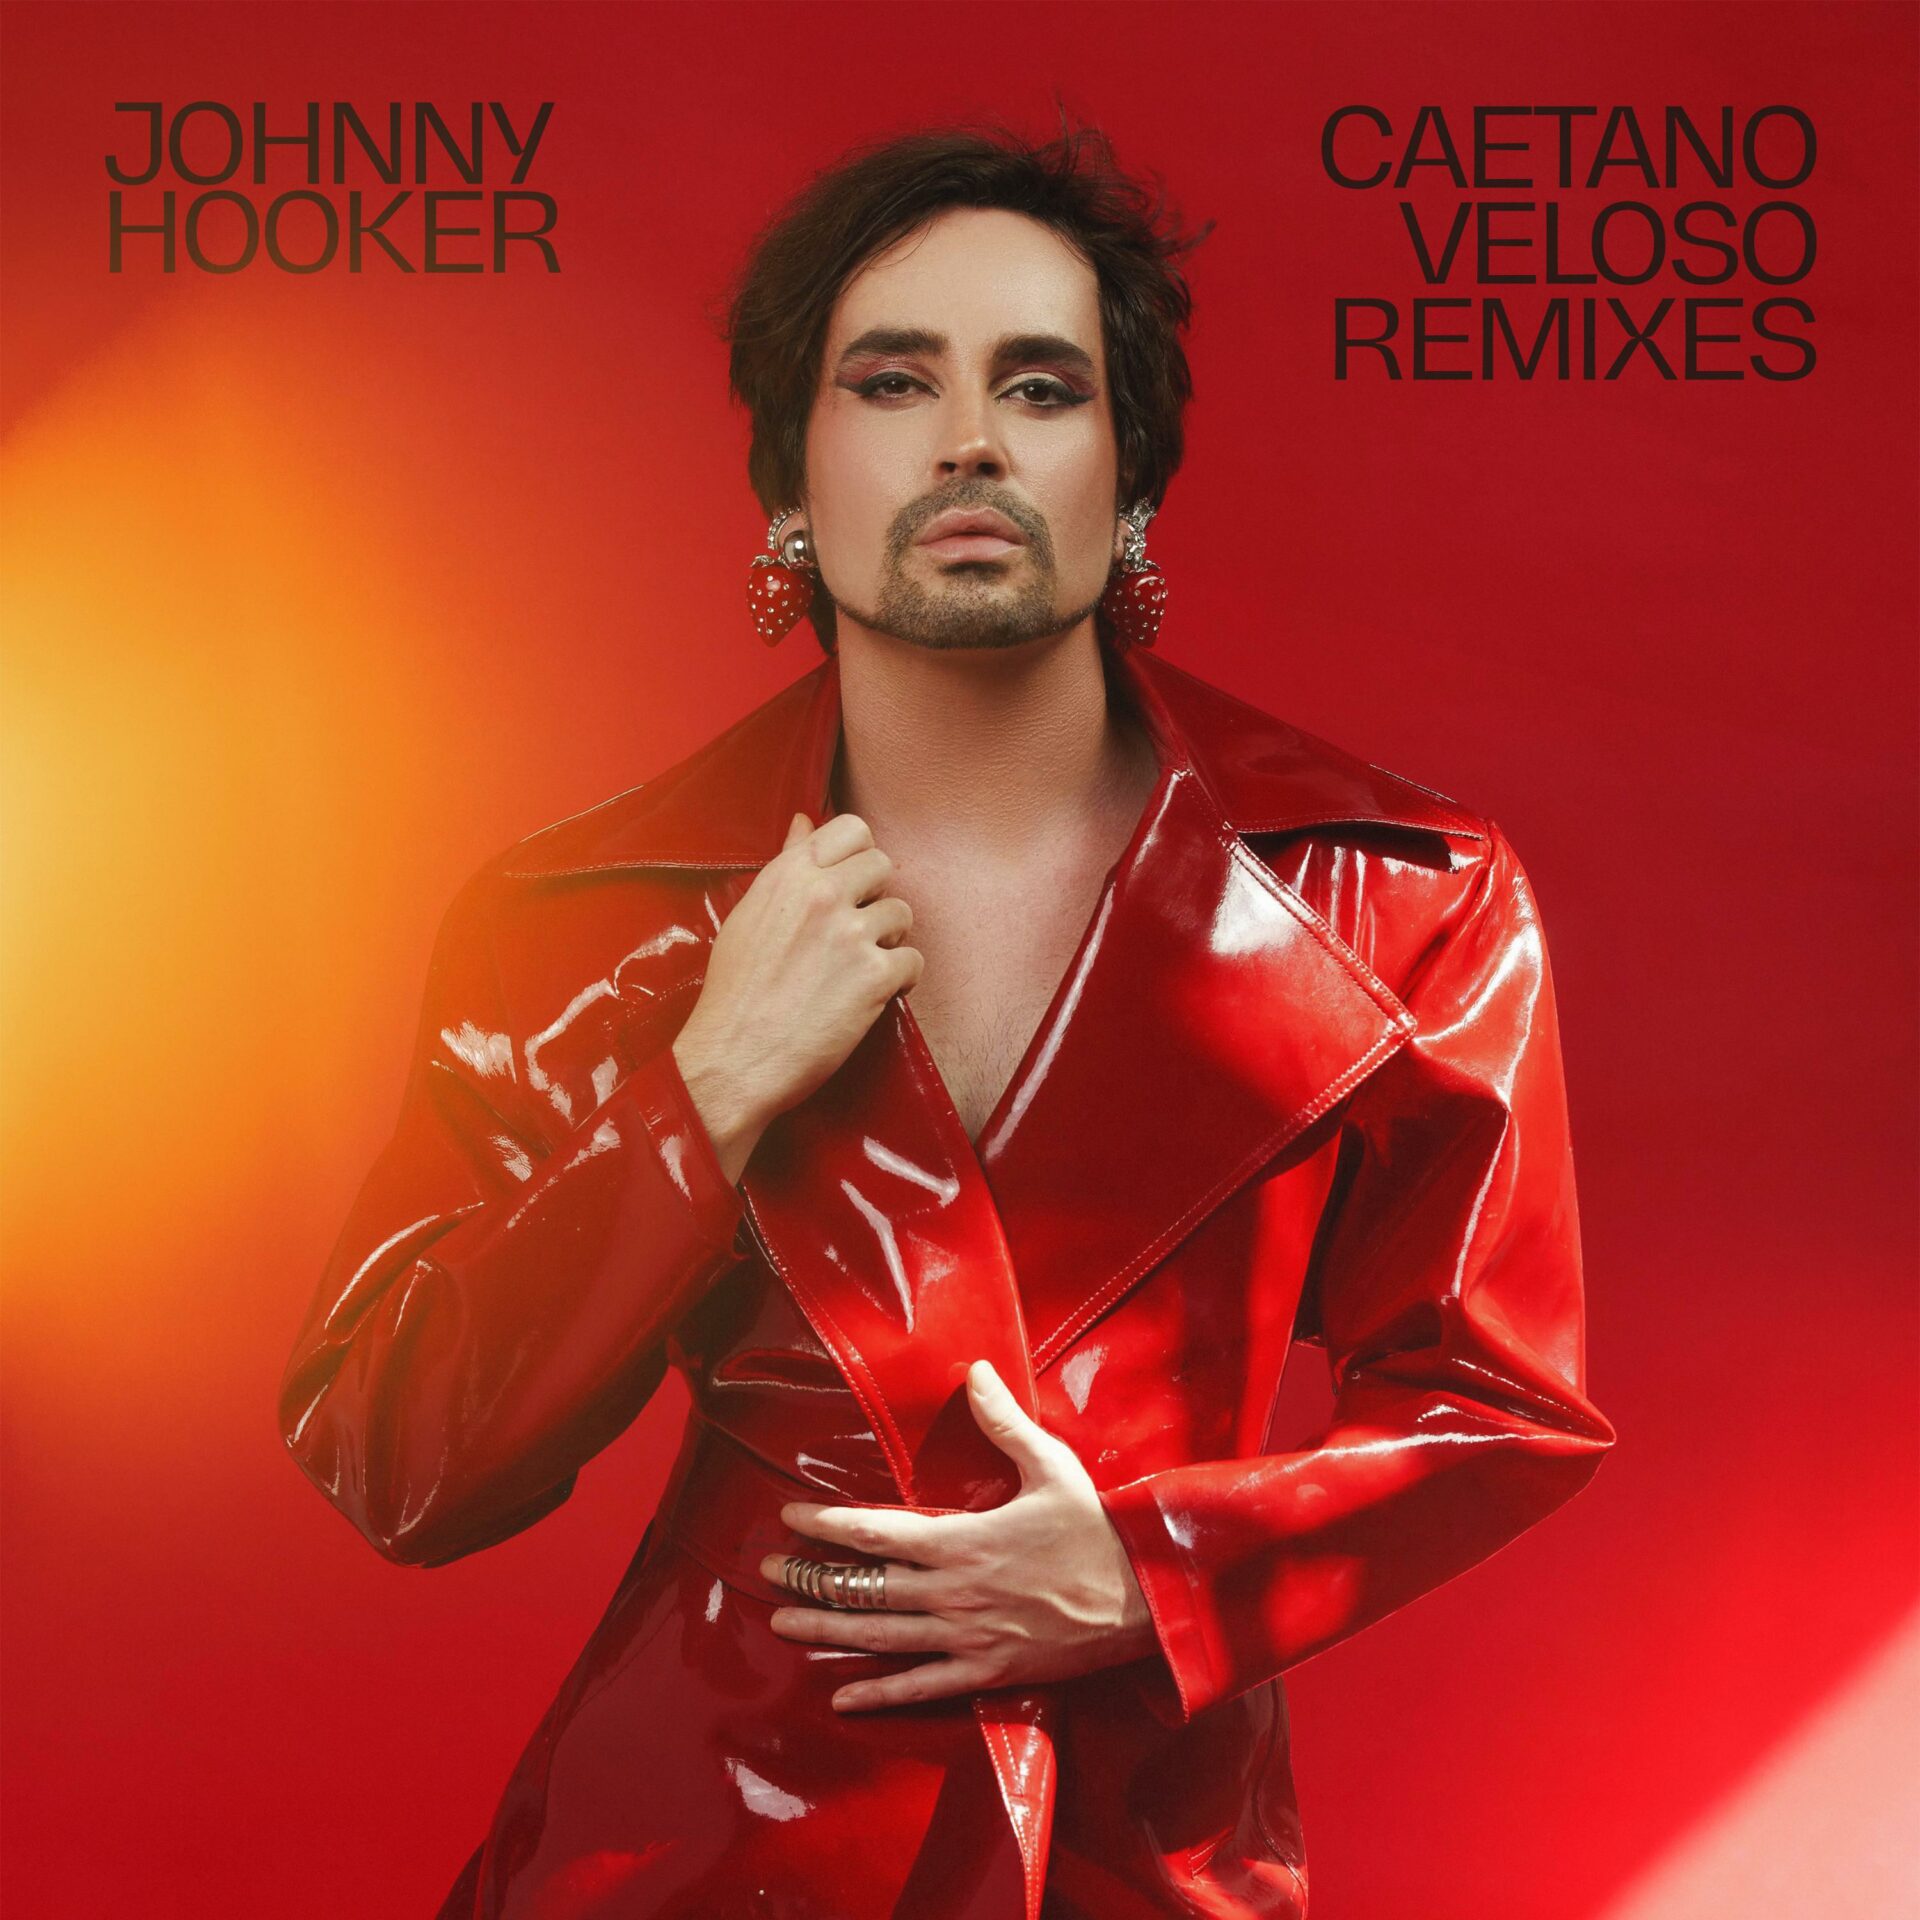 Johnny Hooker lança remixes do single “Caetano Veloso”